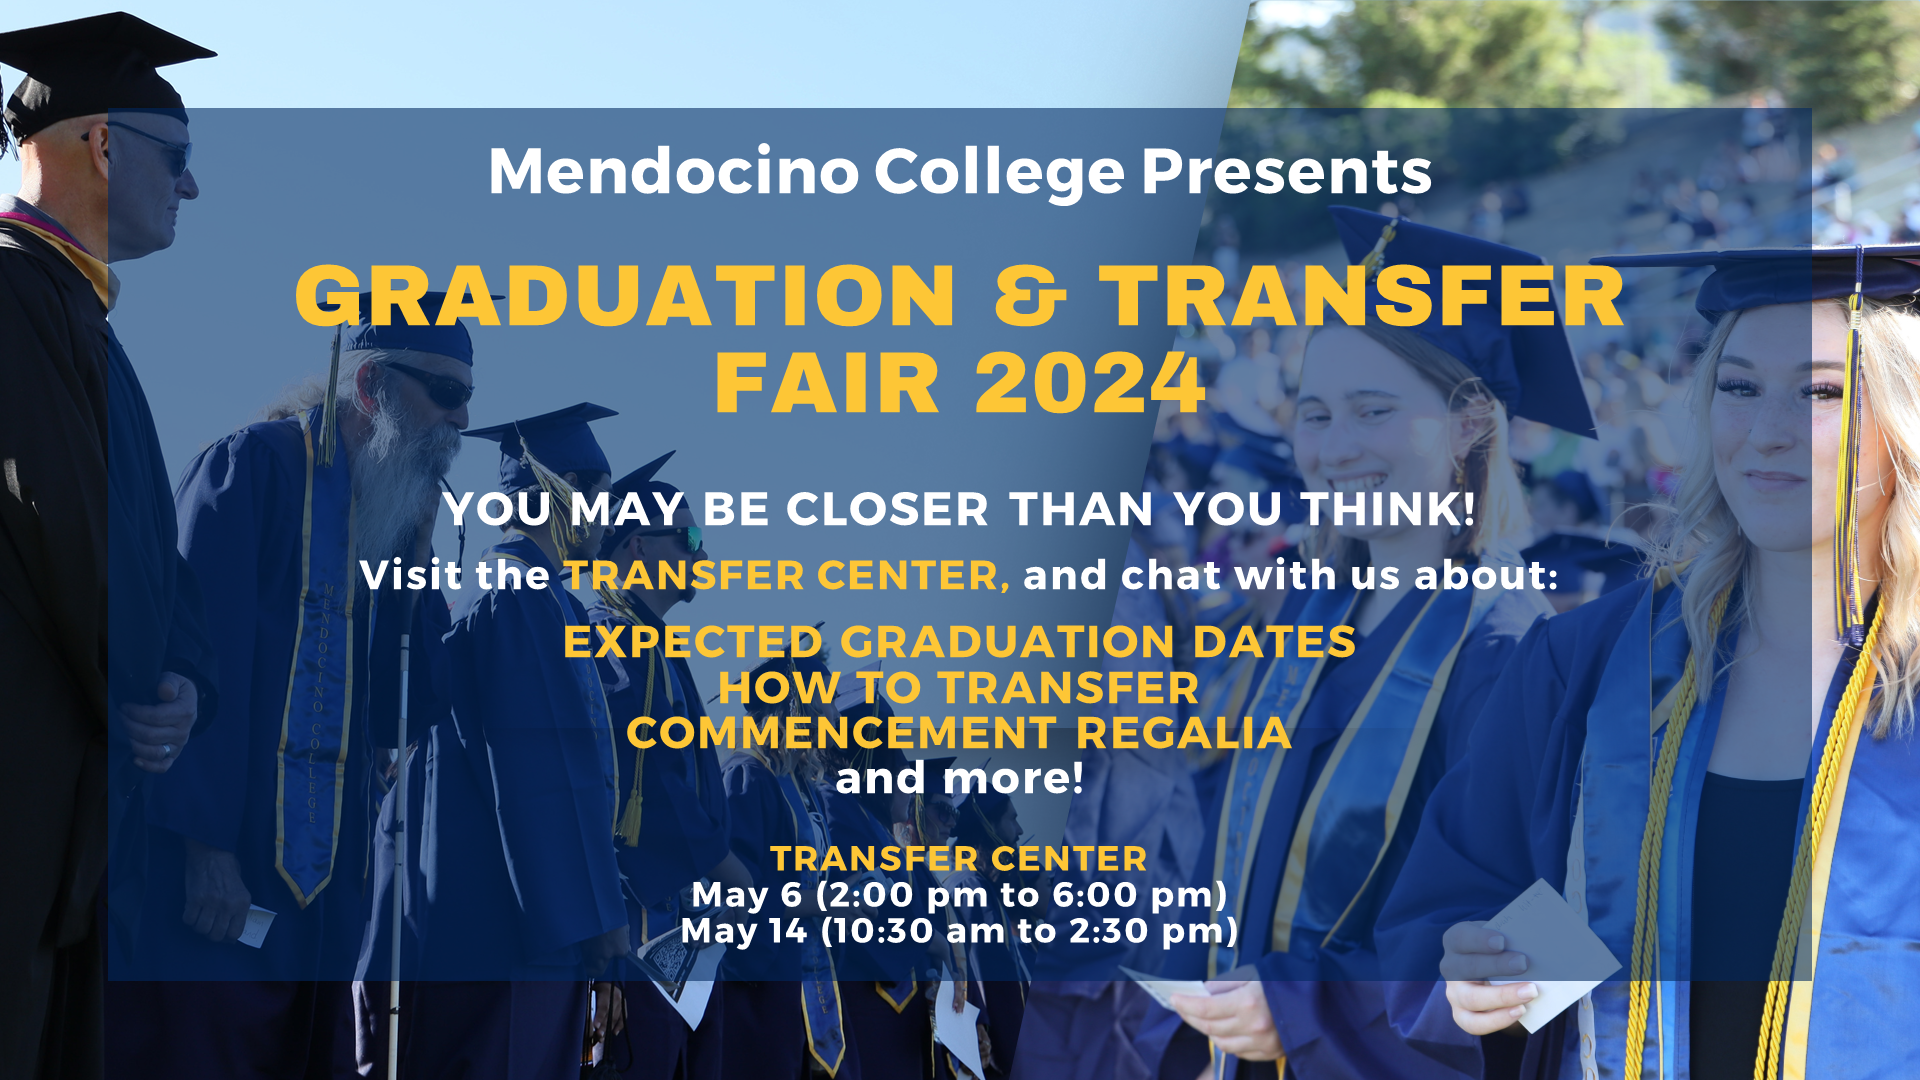 Graduation & Transfer fair 2024 flyer